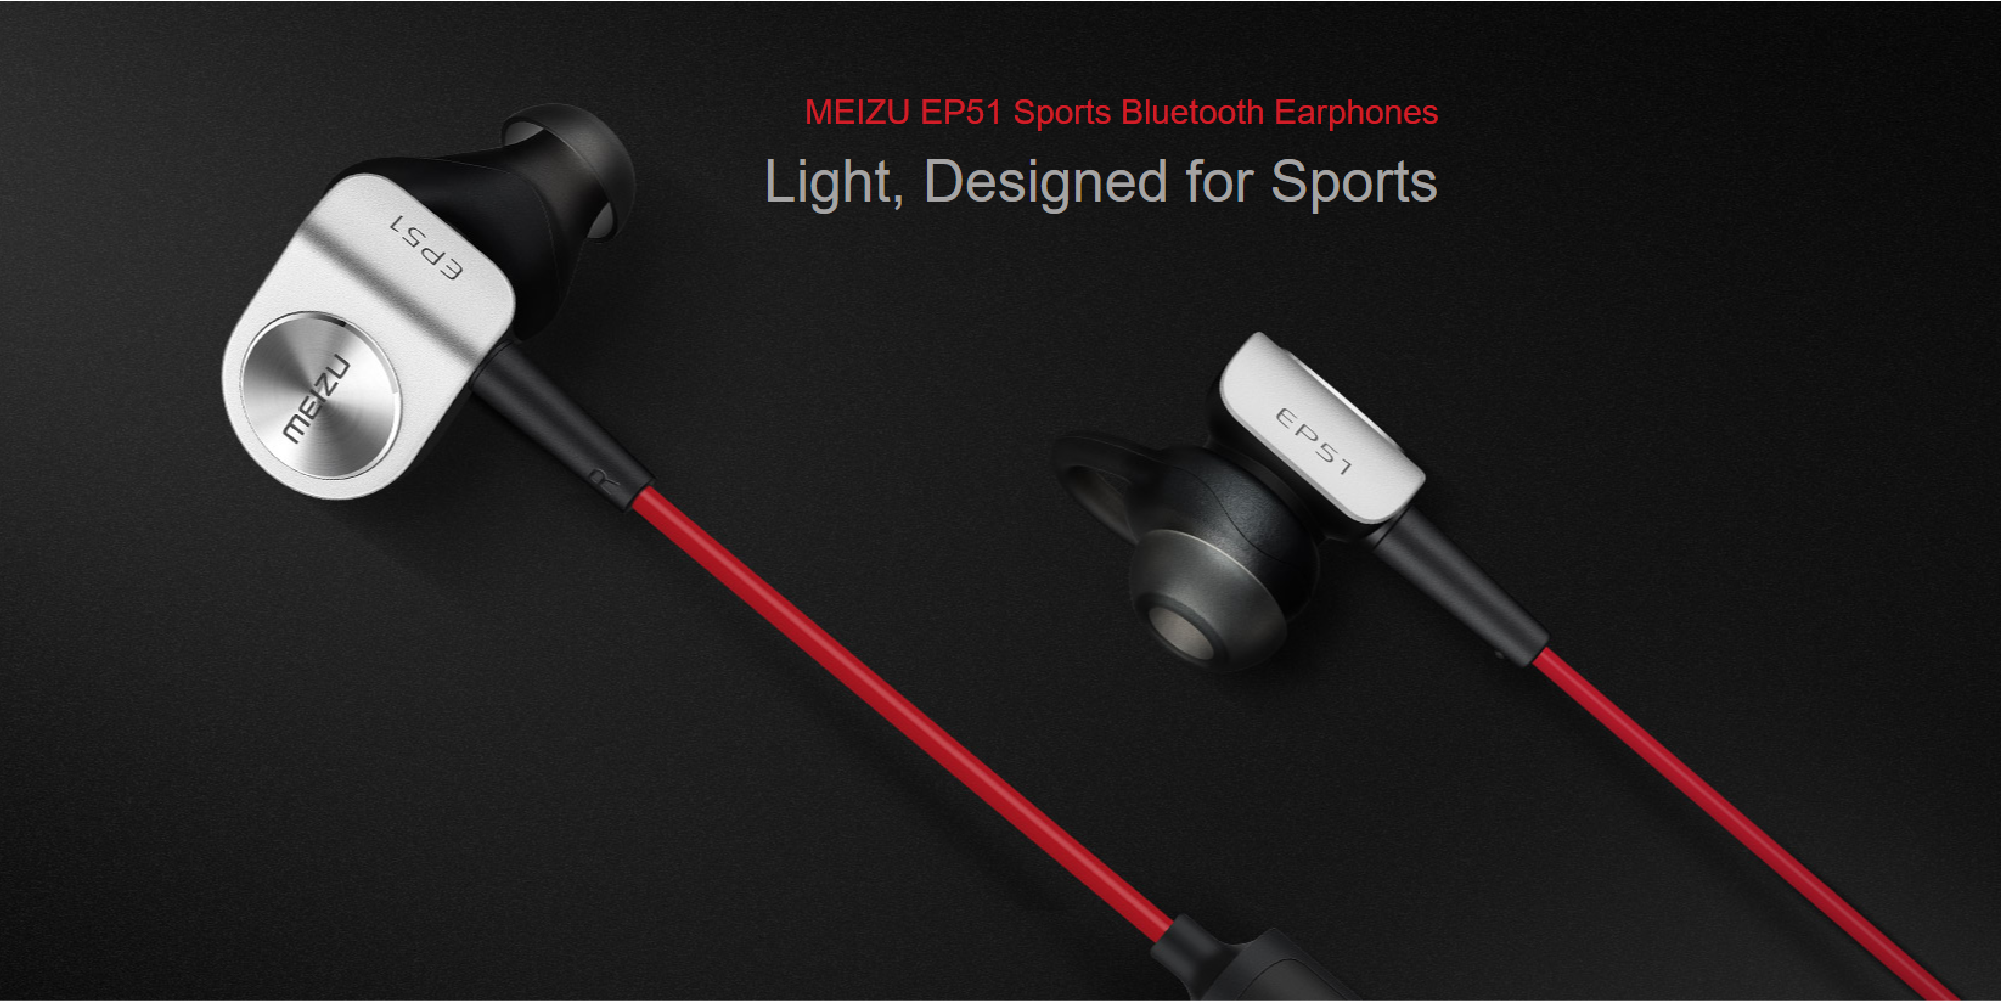 Meizu EP-51 Sports Bluetooth Earphone